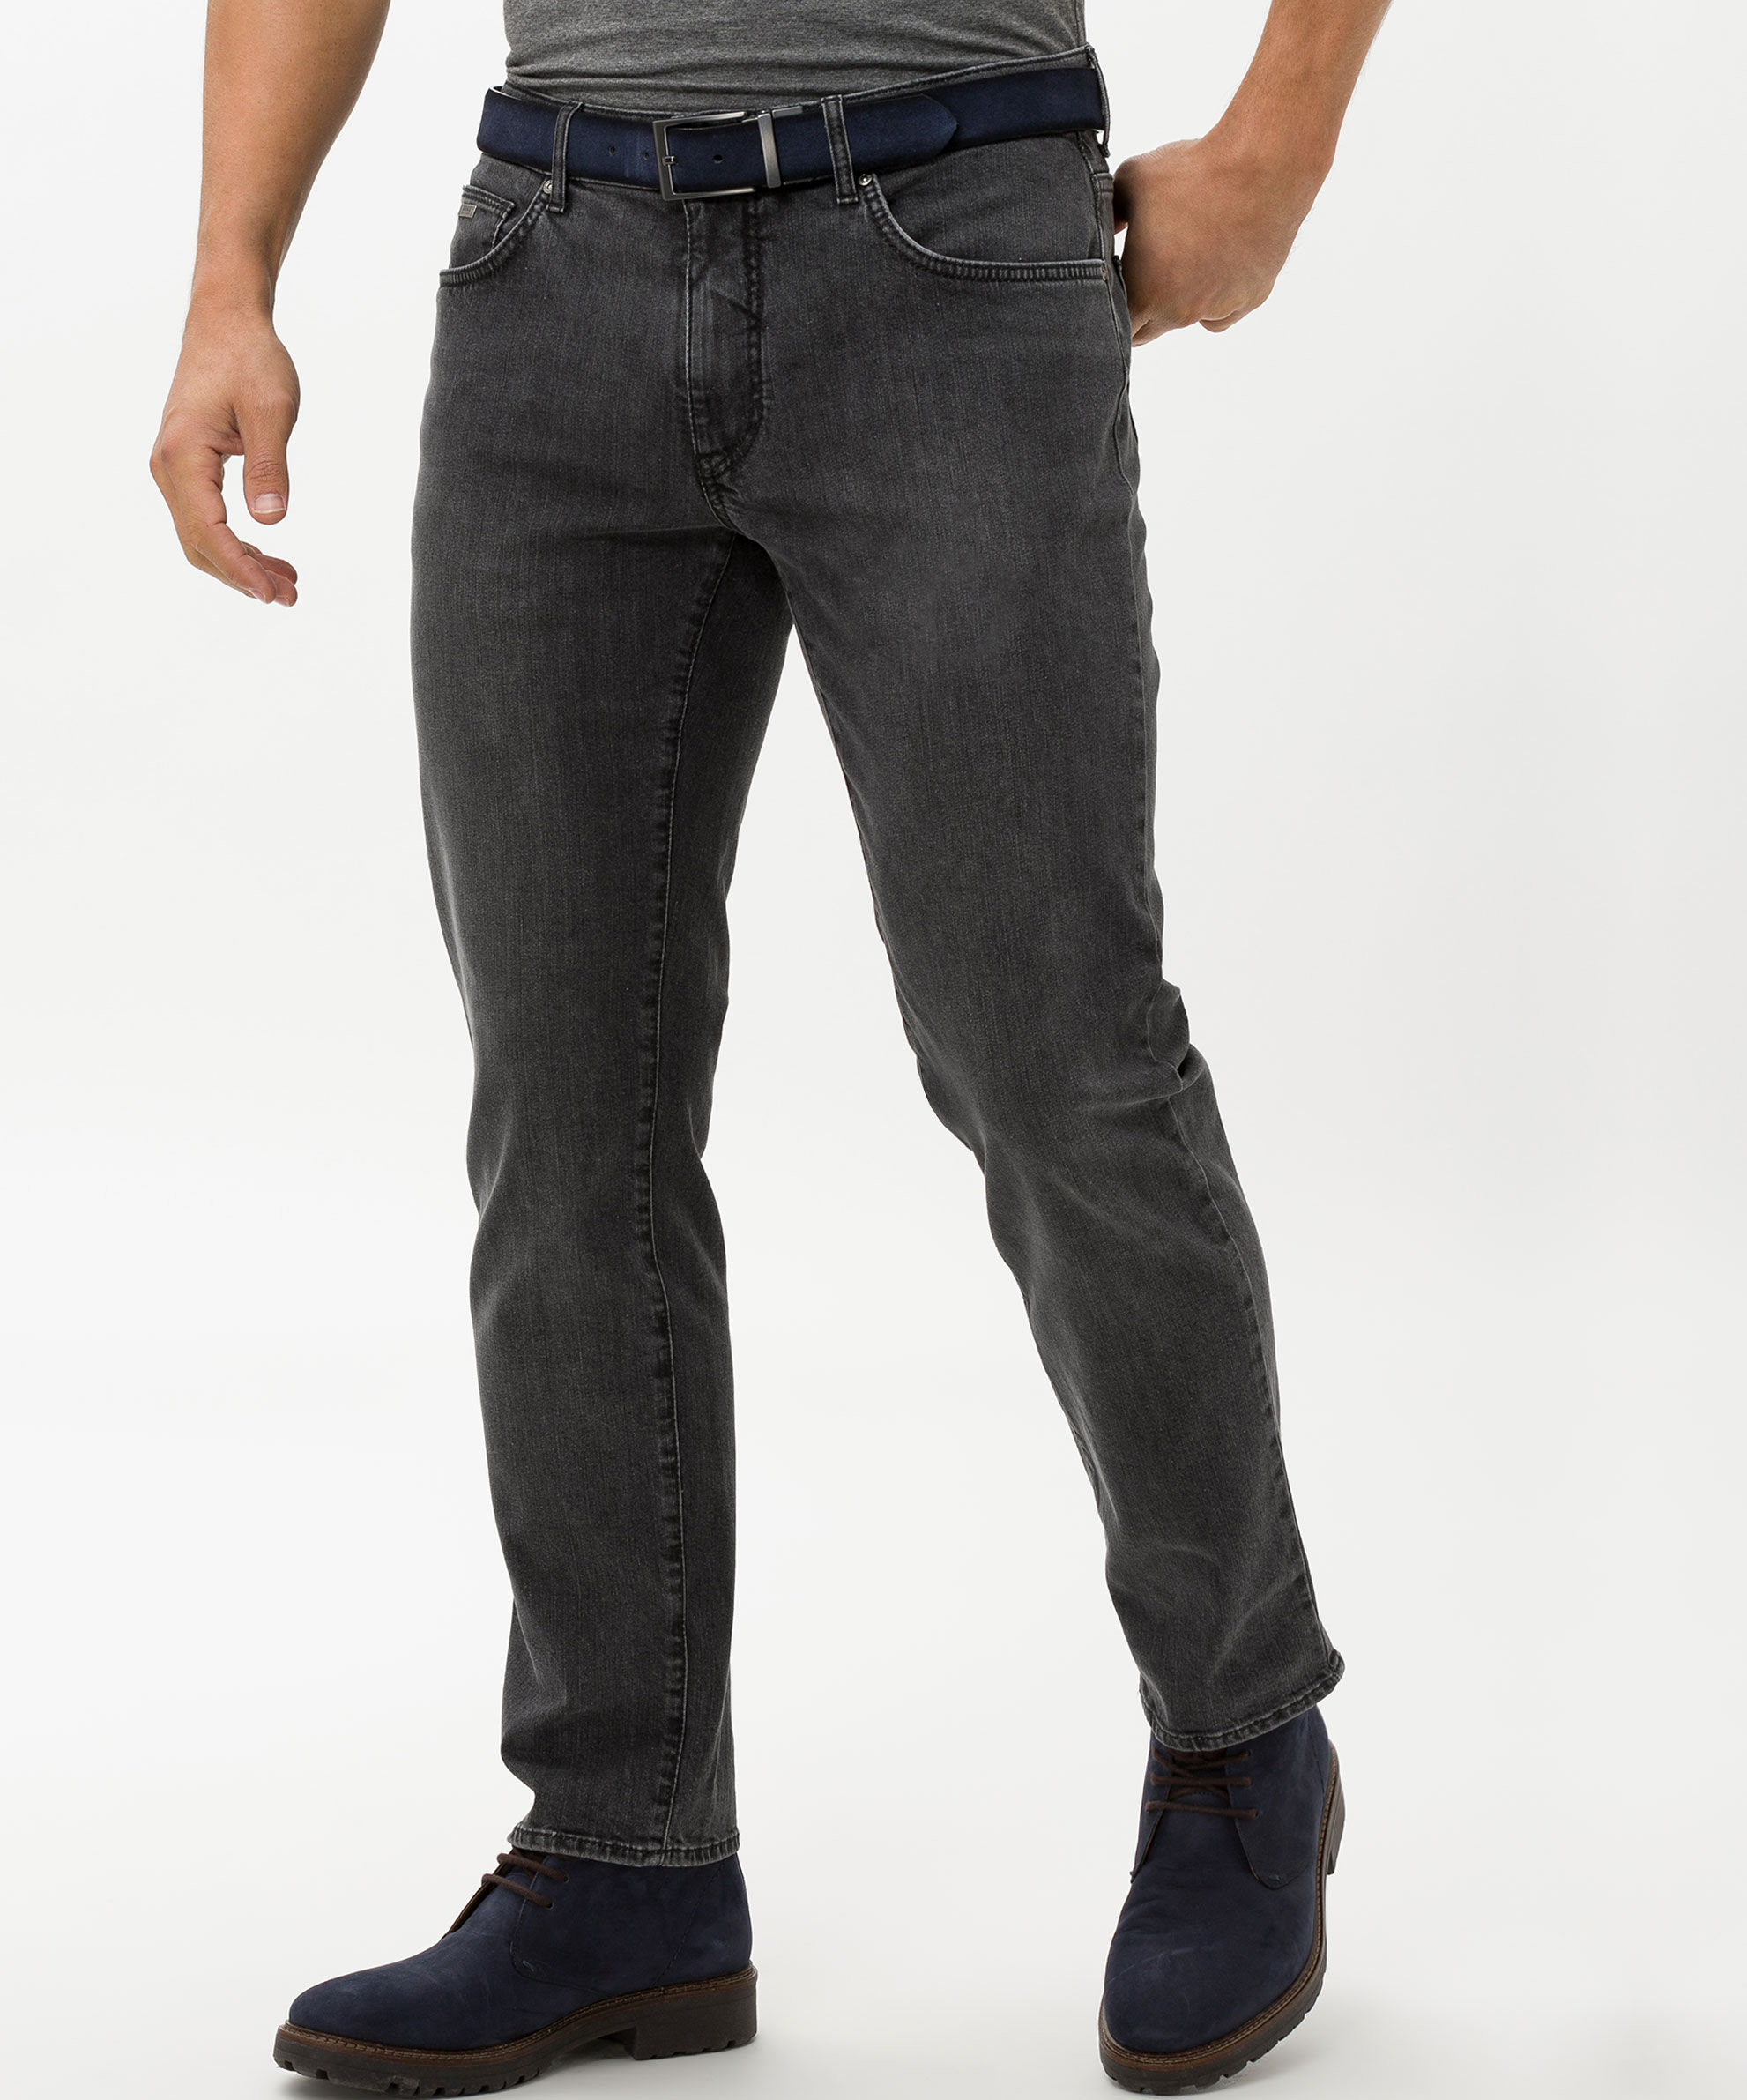 Brax Herren Jeans Hose Five Pocket Style Cadiz grau 80 0070 07960720 05